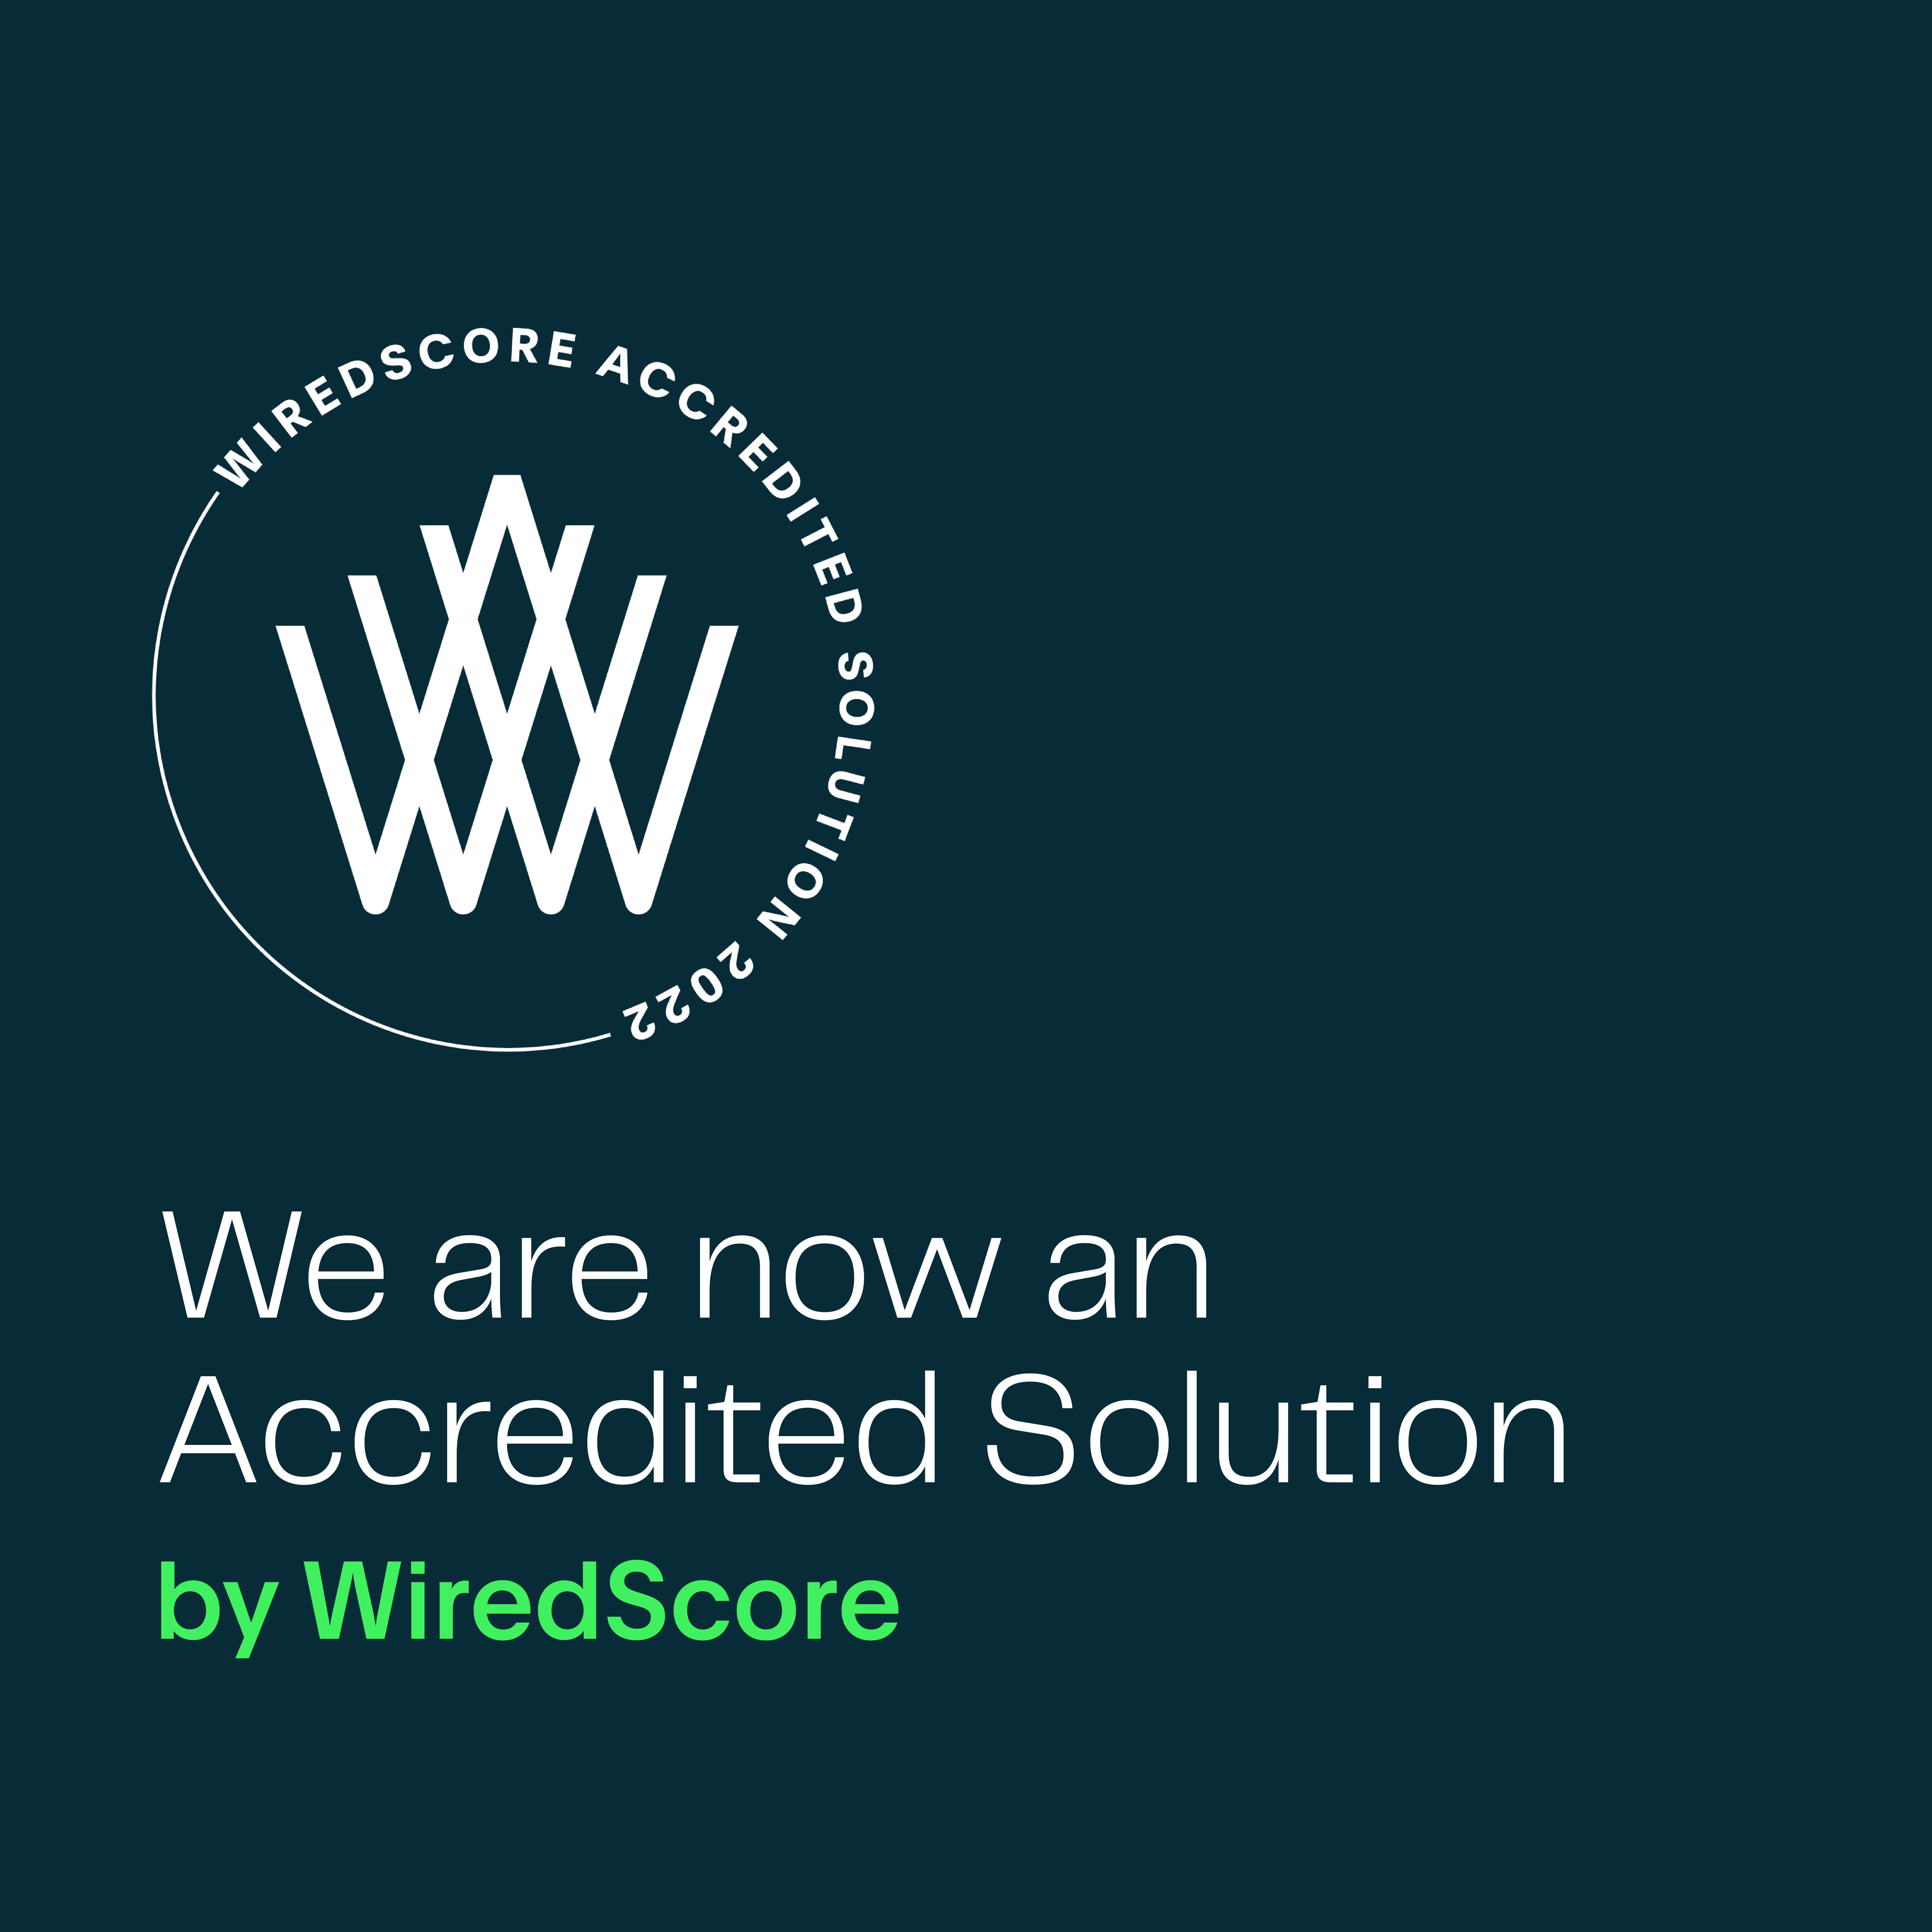 WiredScore Accredited solution